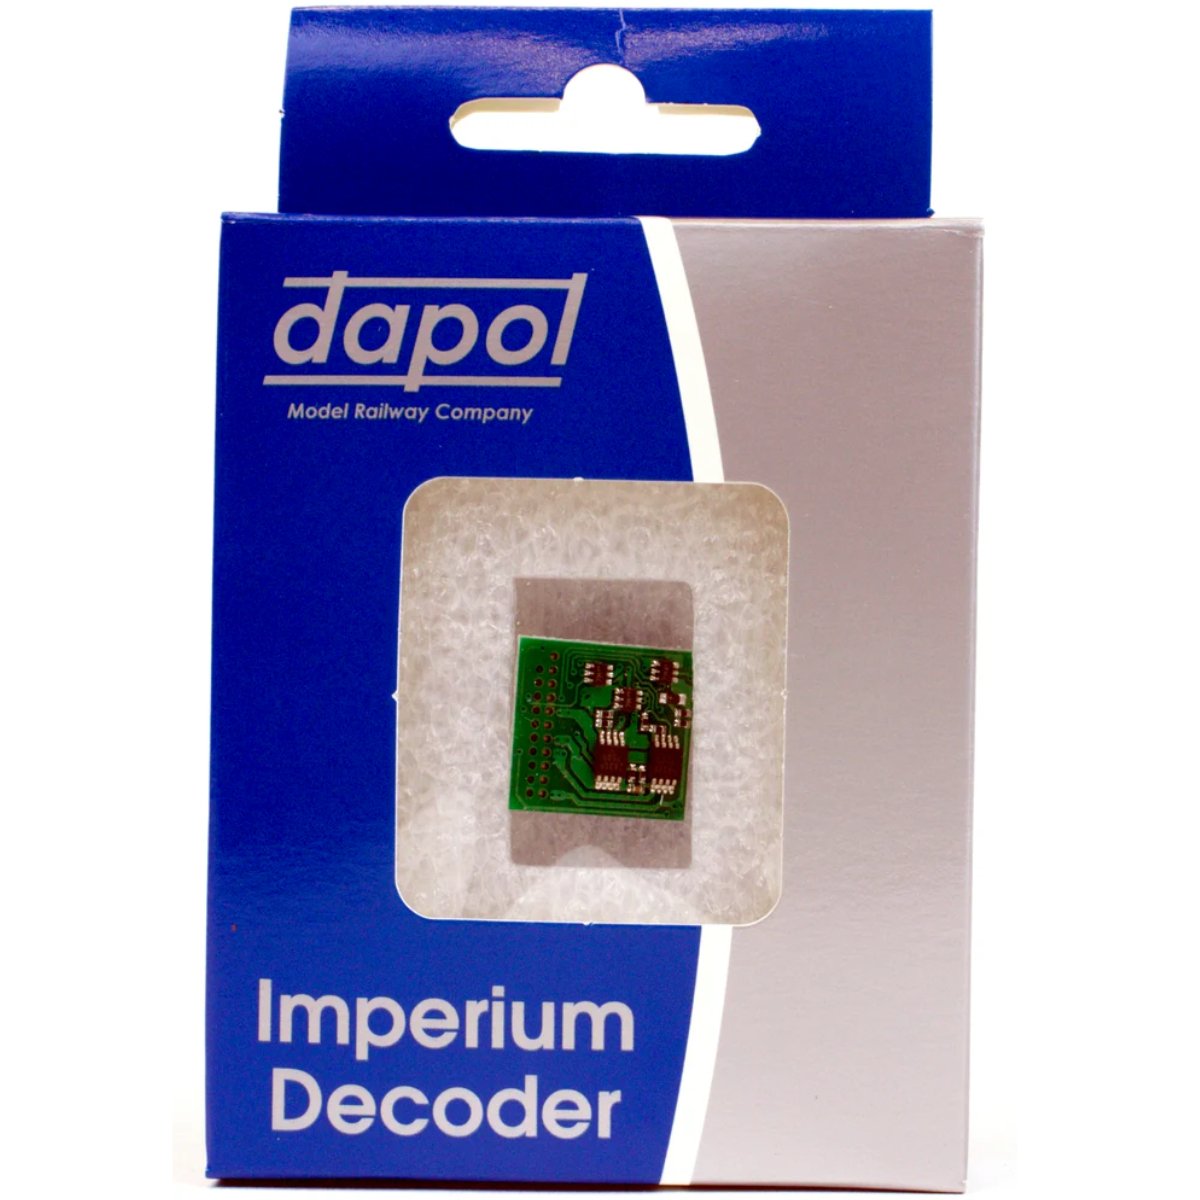 Dapol Imperium1 21 Pin MTC 6 Function Decoder - Phillips Hobbies